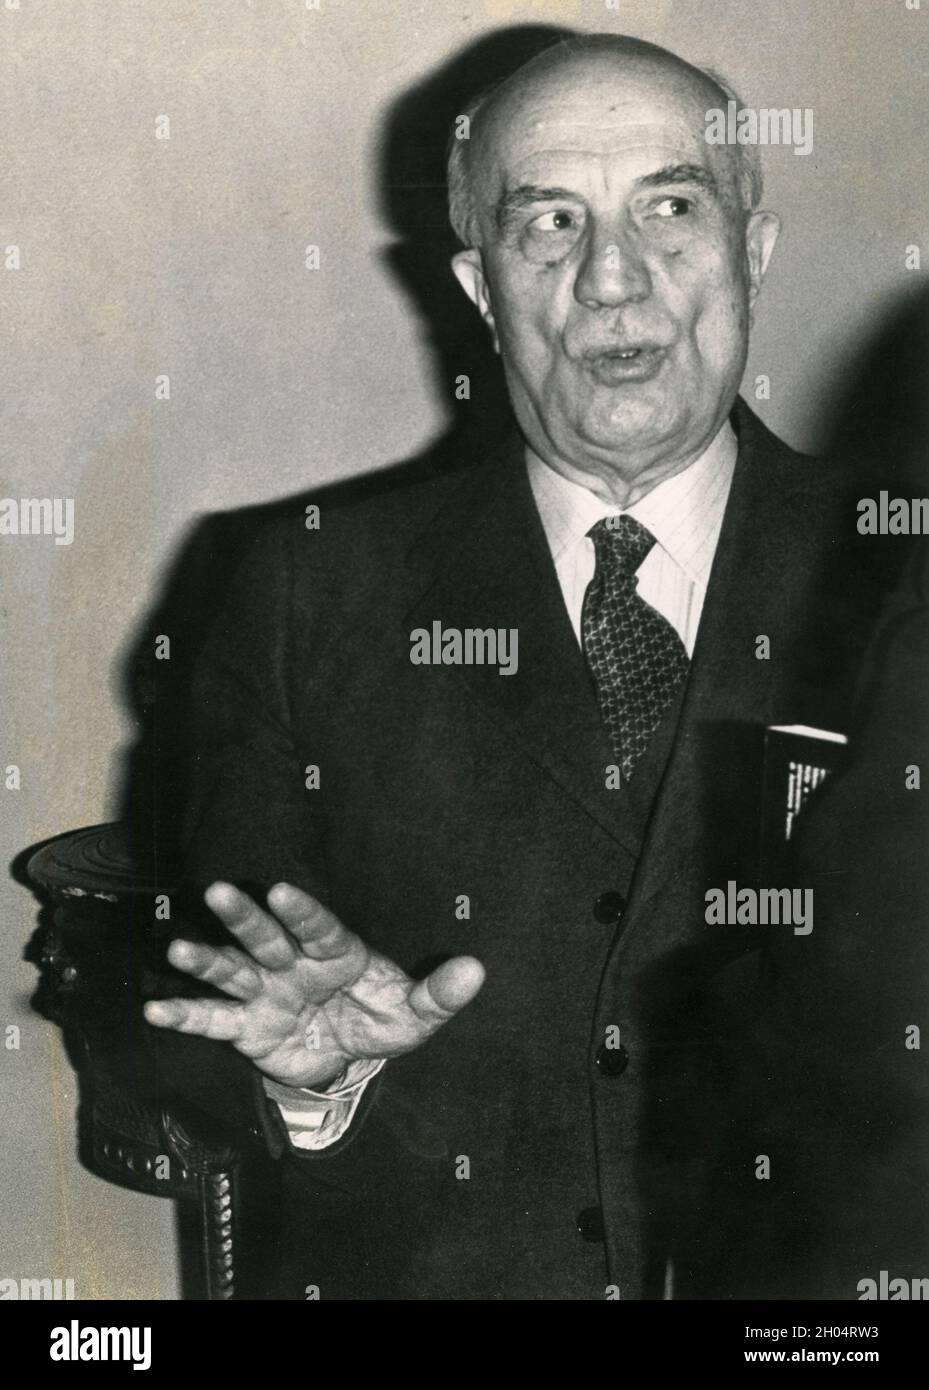 Italian politician PM Amintore Fanfani, 1980s Stock Photo - Alamy